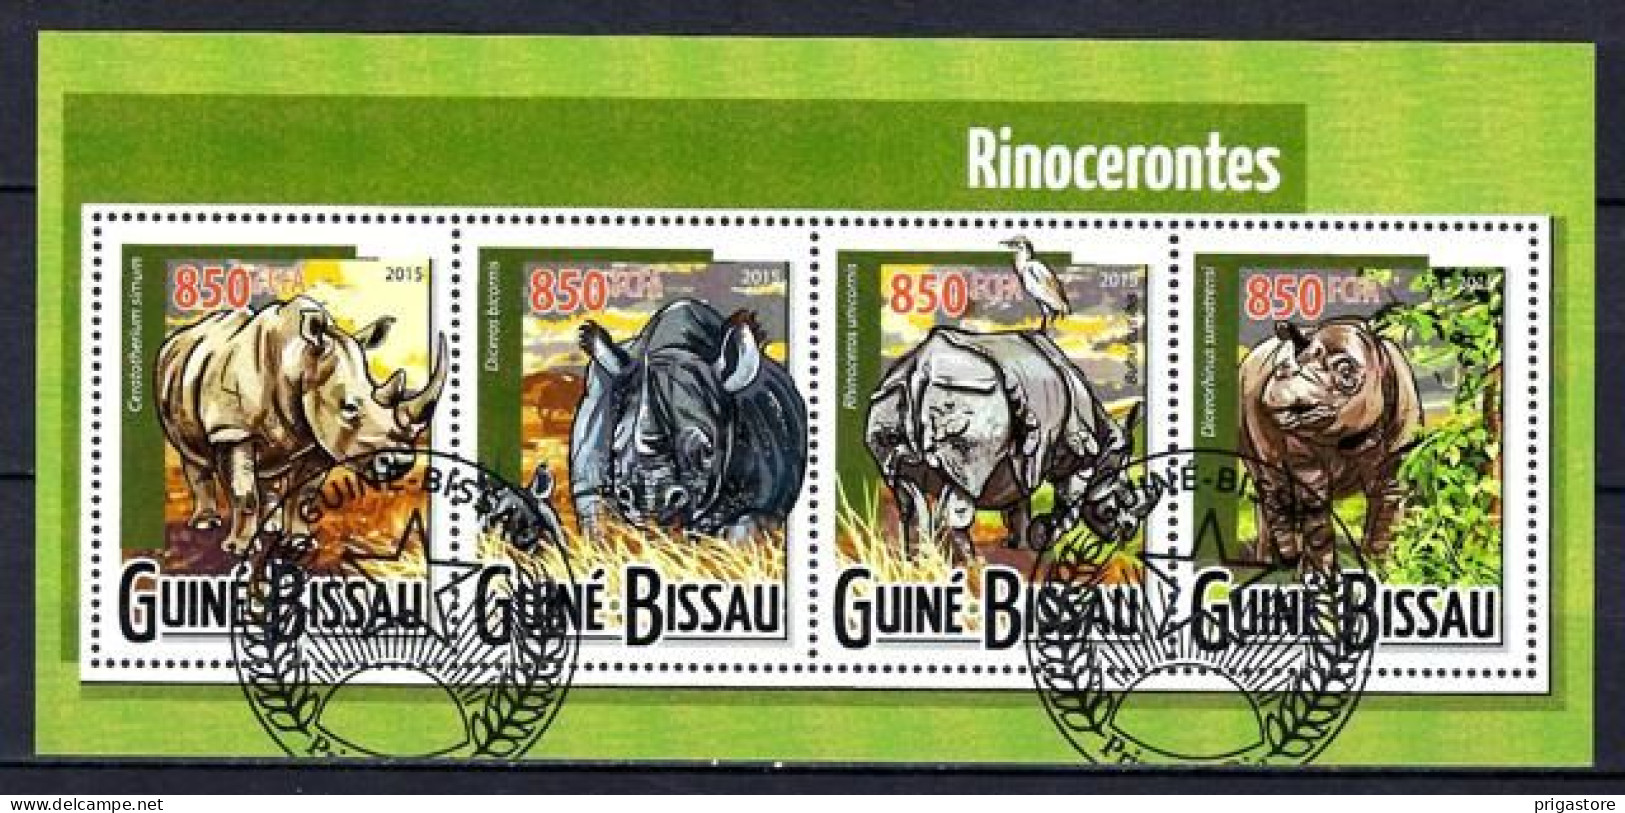 Animaux Rhinocéros Guinée Bissau 2015 (329) Yvert N° 6012 à 6015 Oblitérés Used - Rhinozerosse